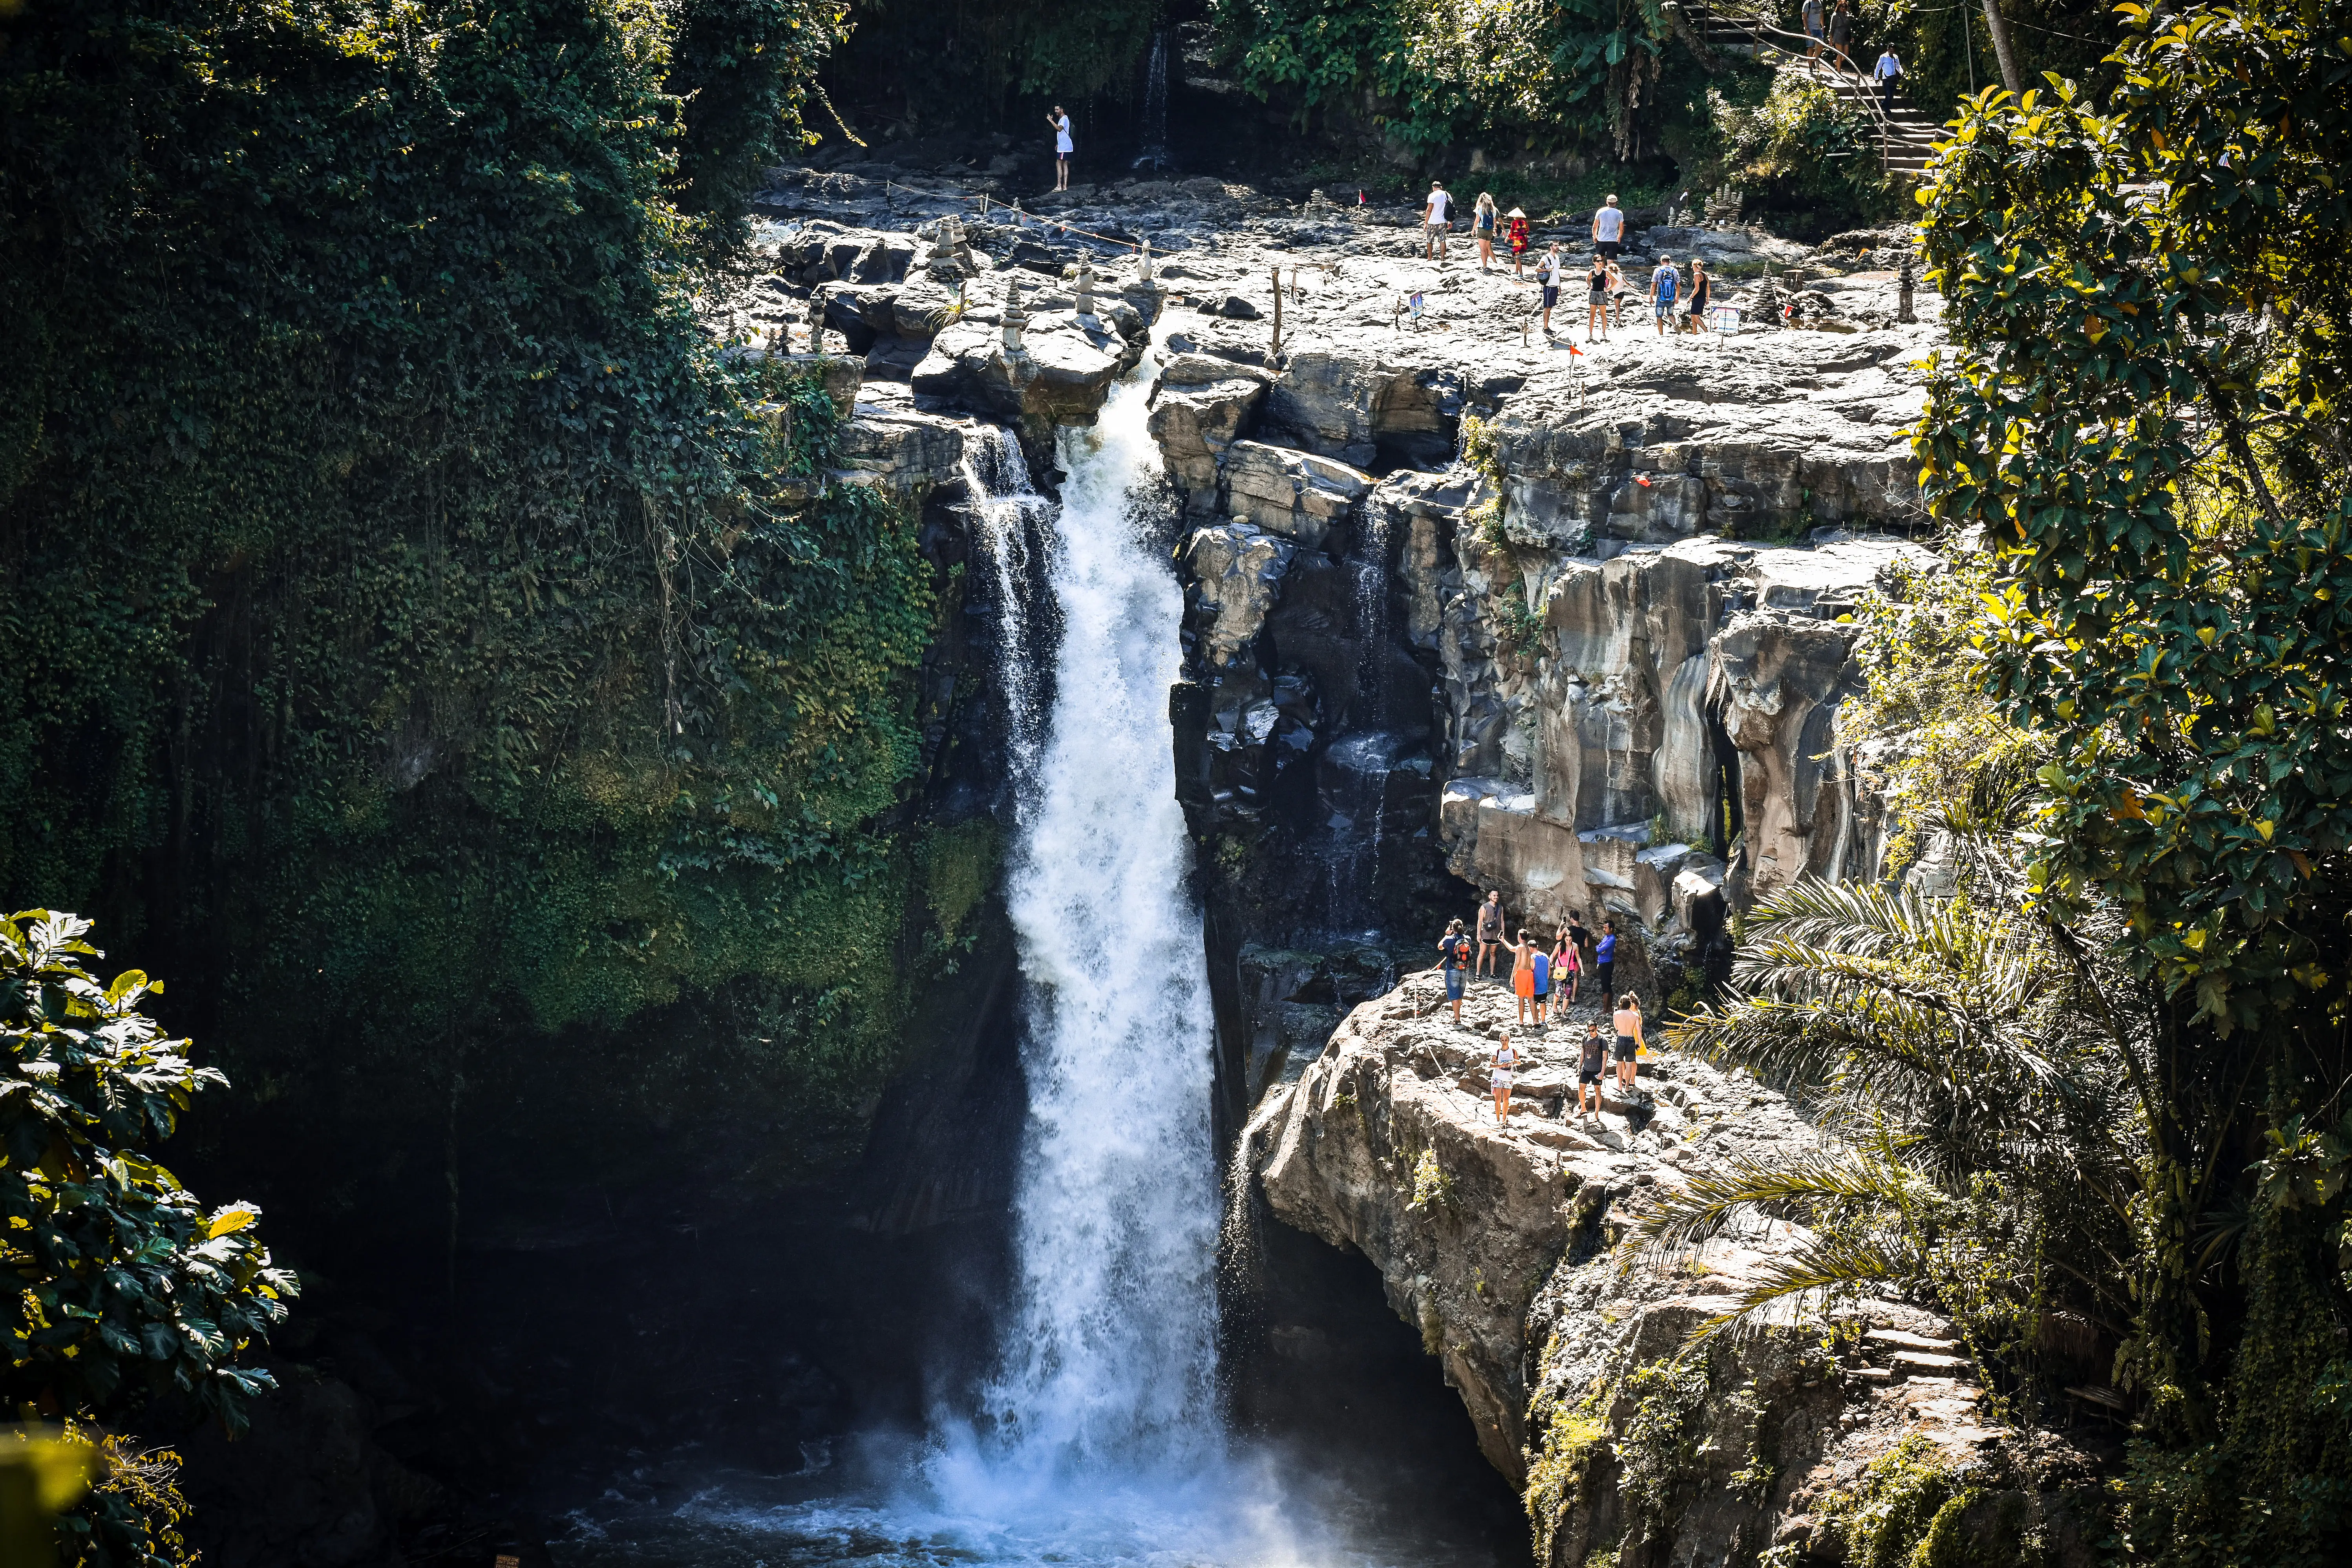 Tegenungan Waterfall, visit from Ubud, Bali